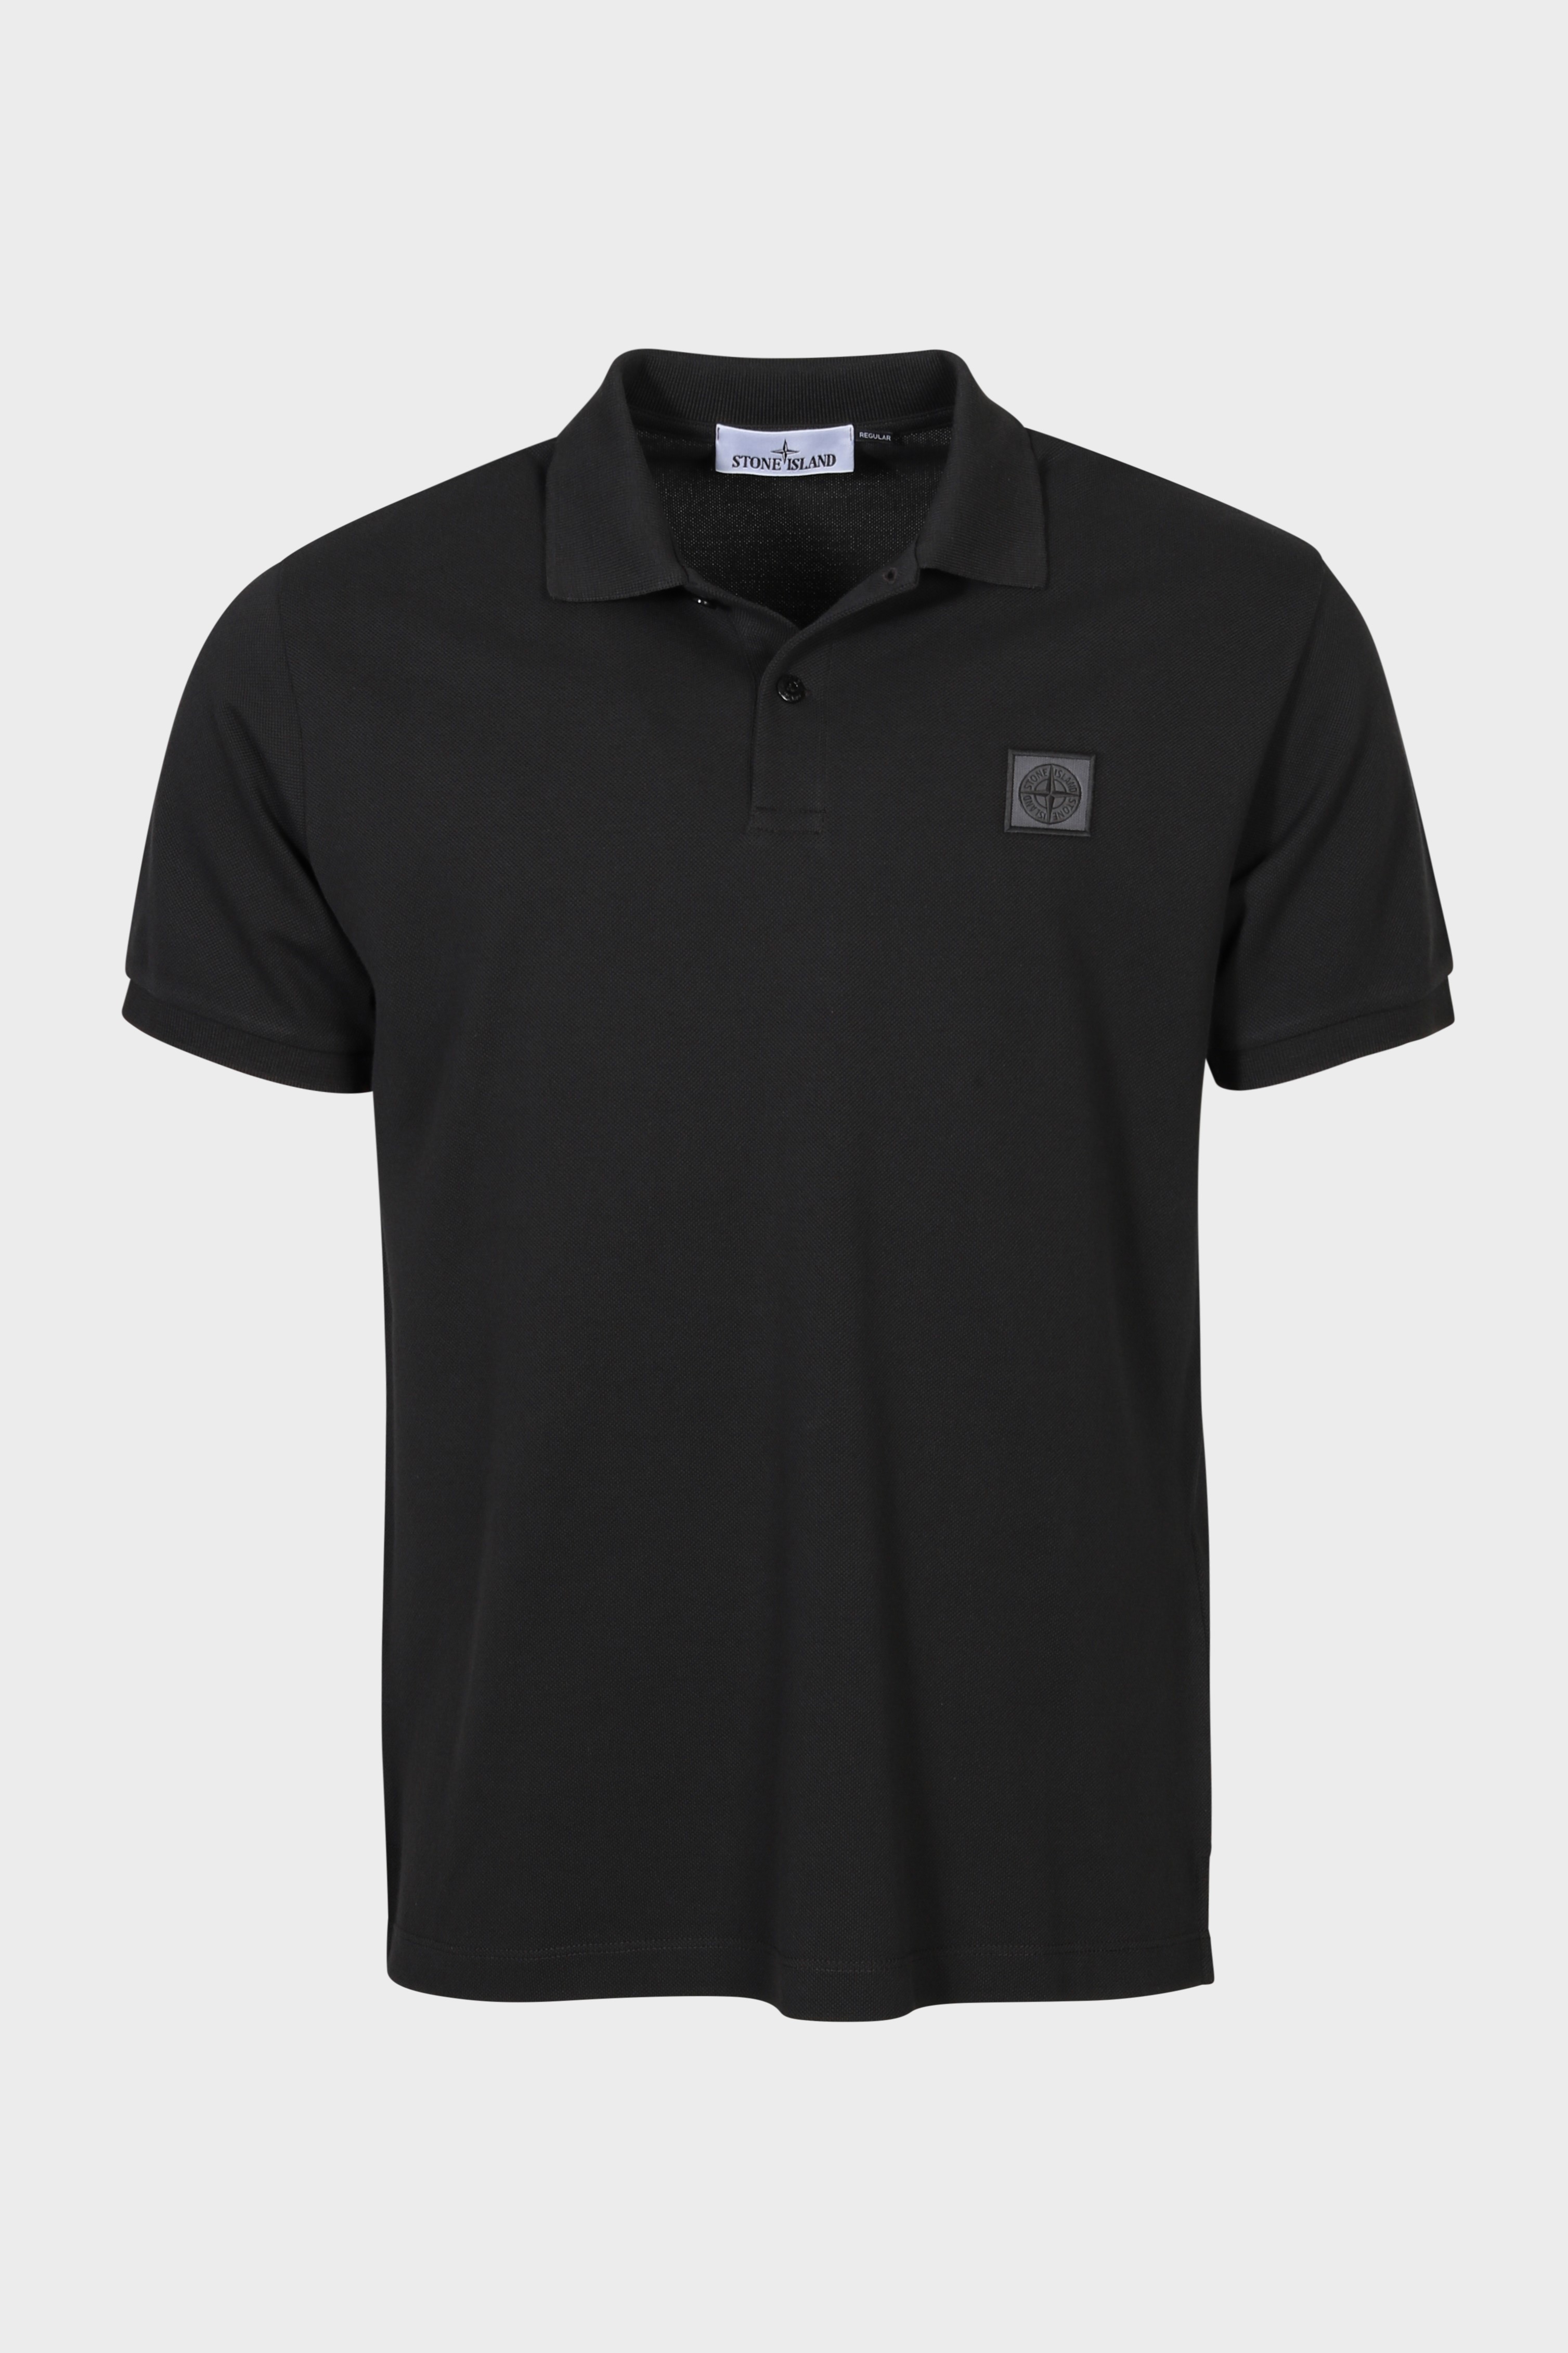 STONE ISLAND Regular Fit Polo Shirt in Dark Grey